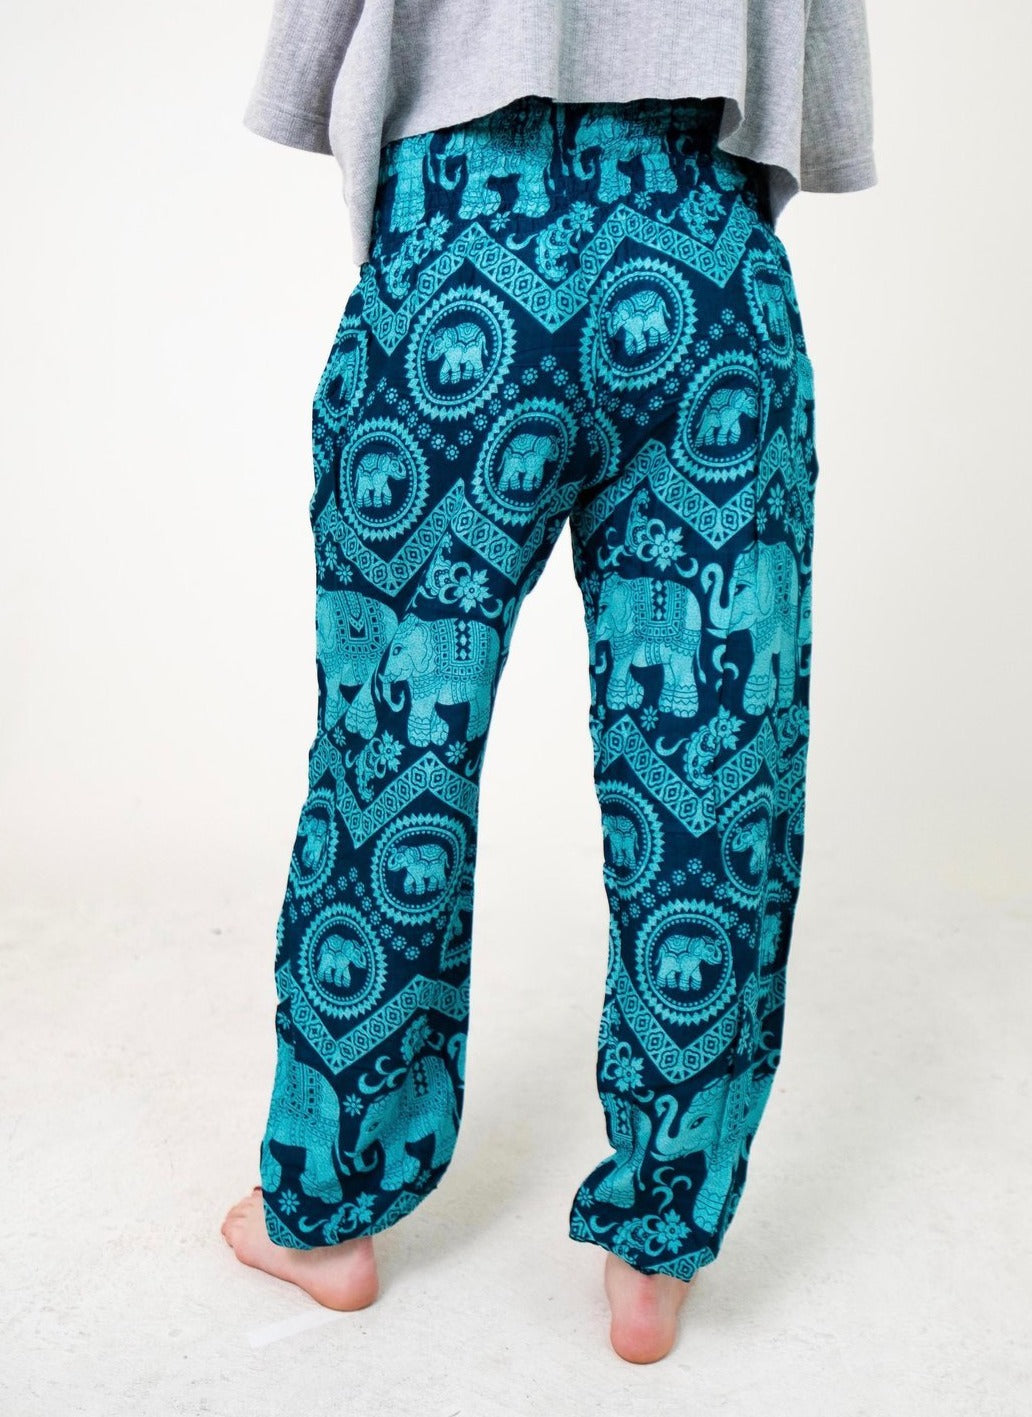 Big size elephant pants, big size️ 2XL, Yoga Pants ,Plus size to 58 inches.  | eBay